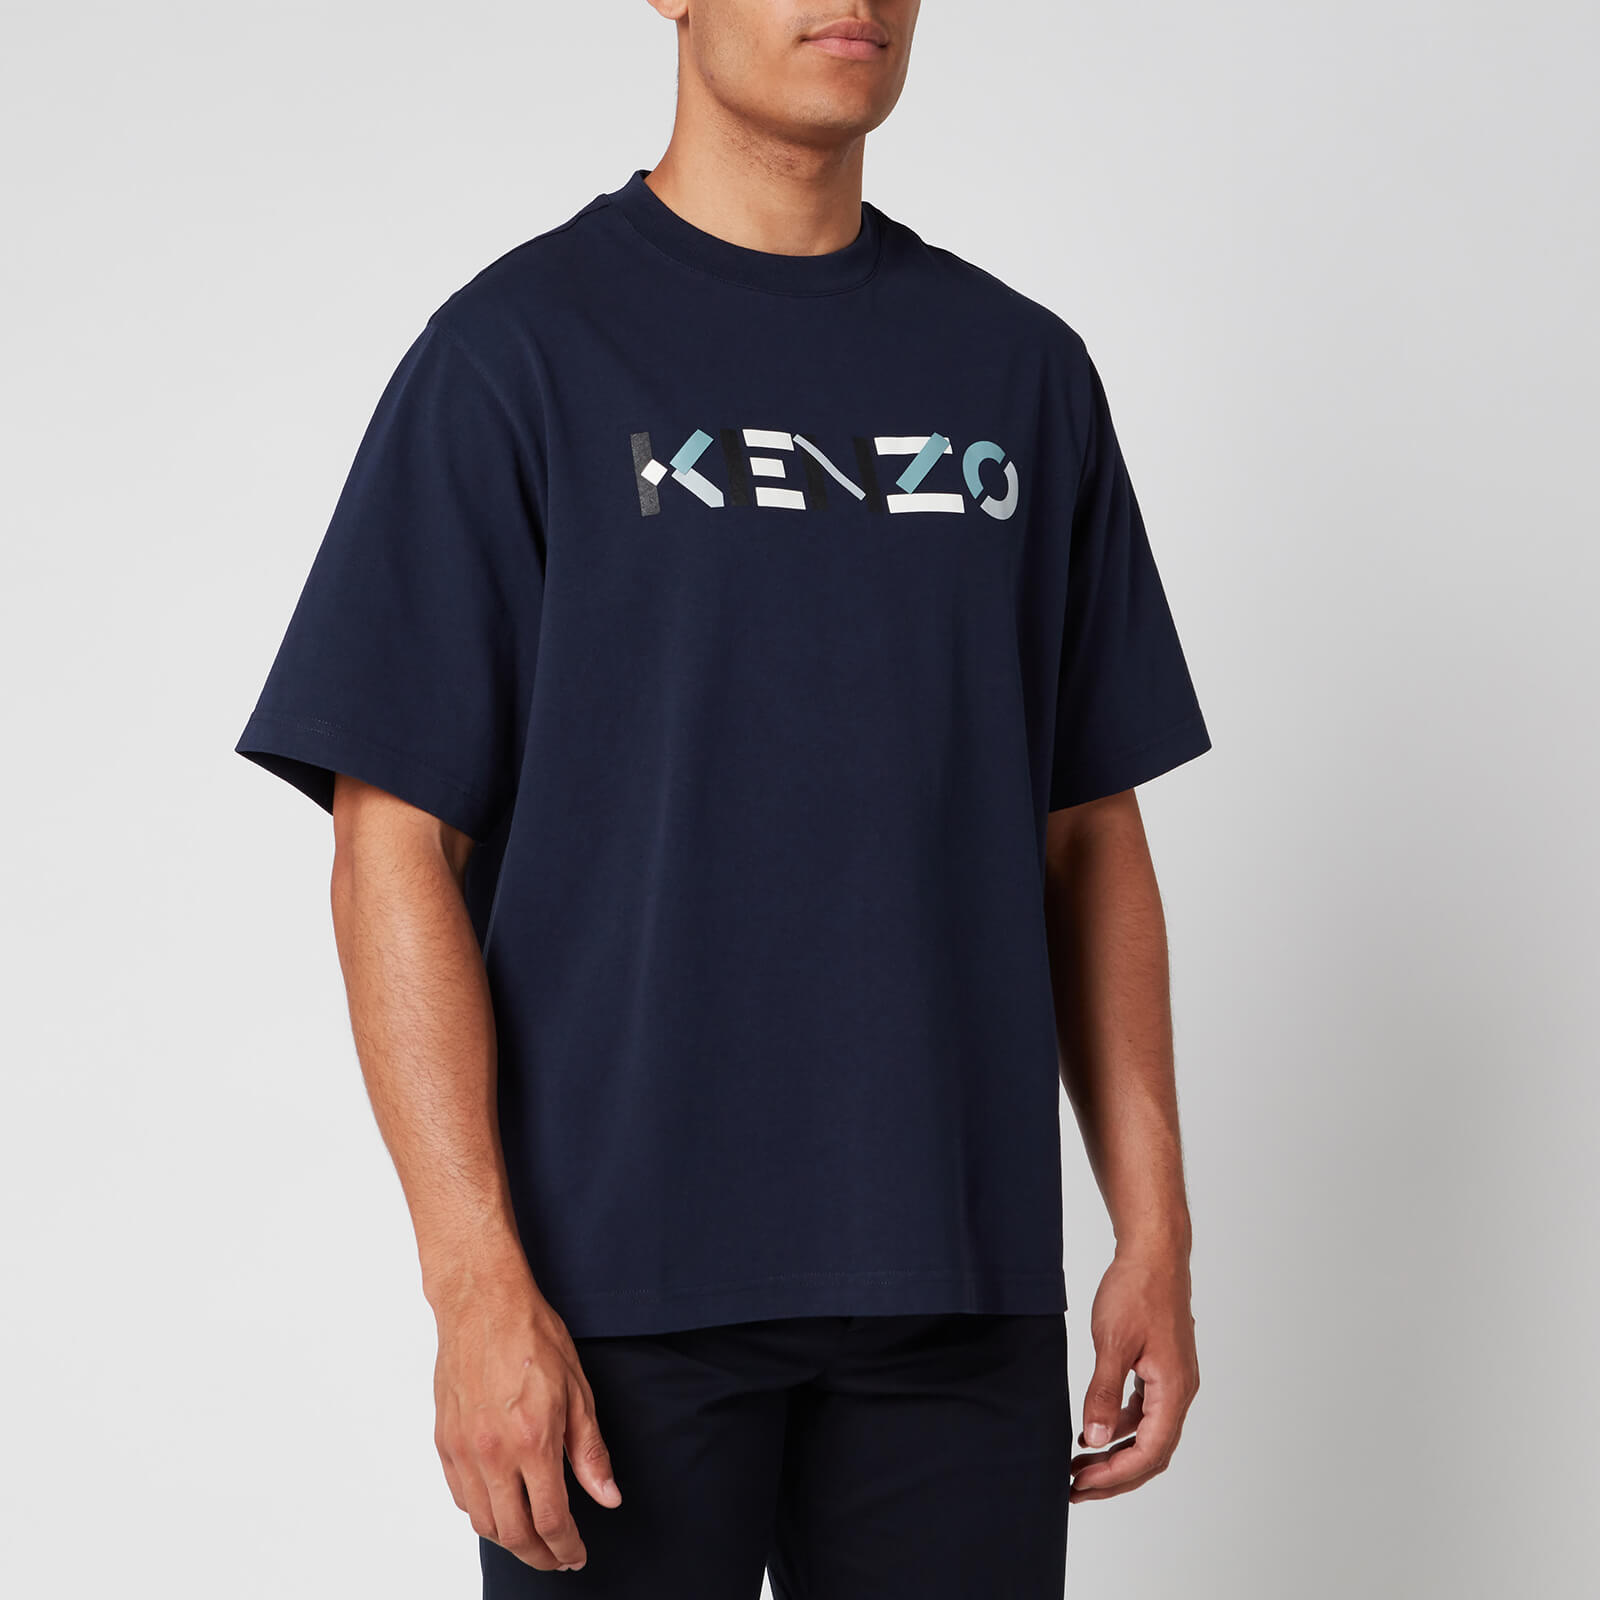 kenzo t shirt navy blue